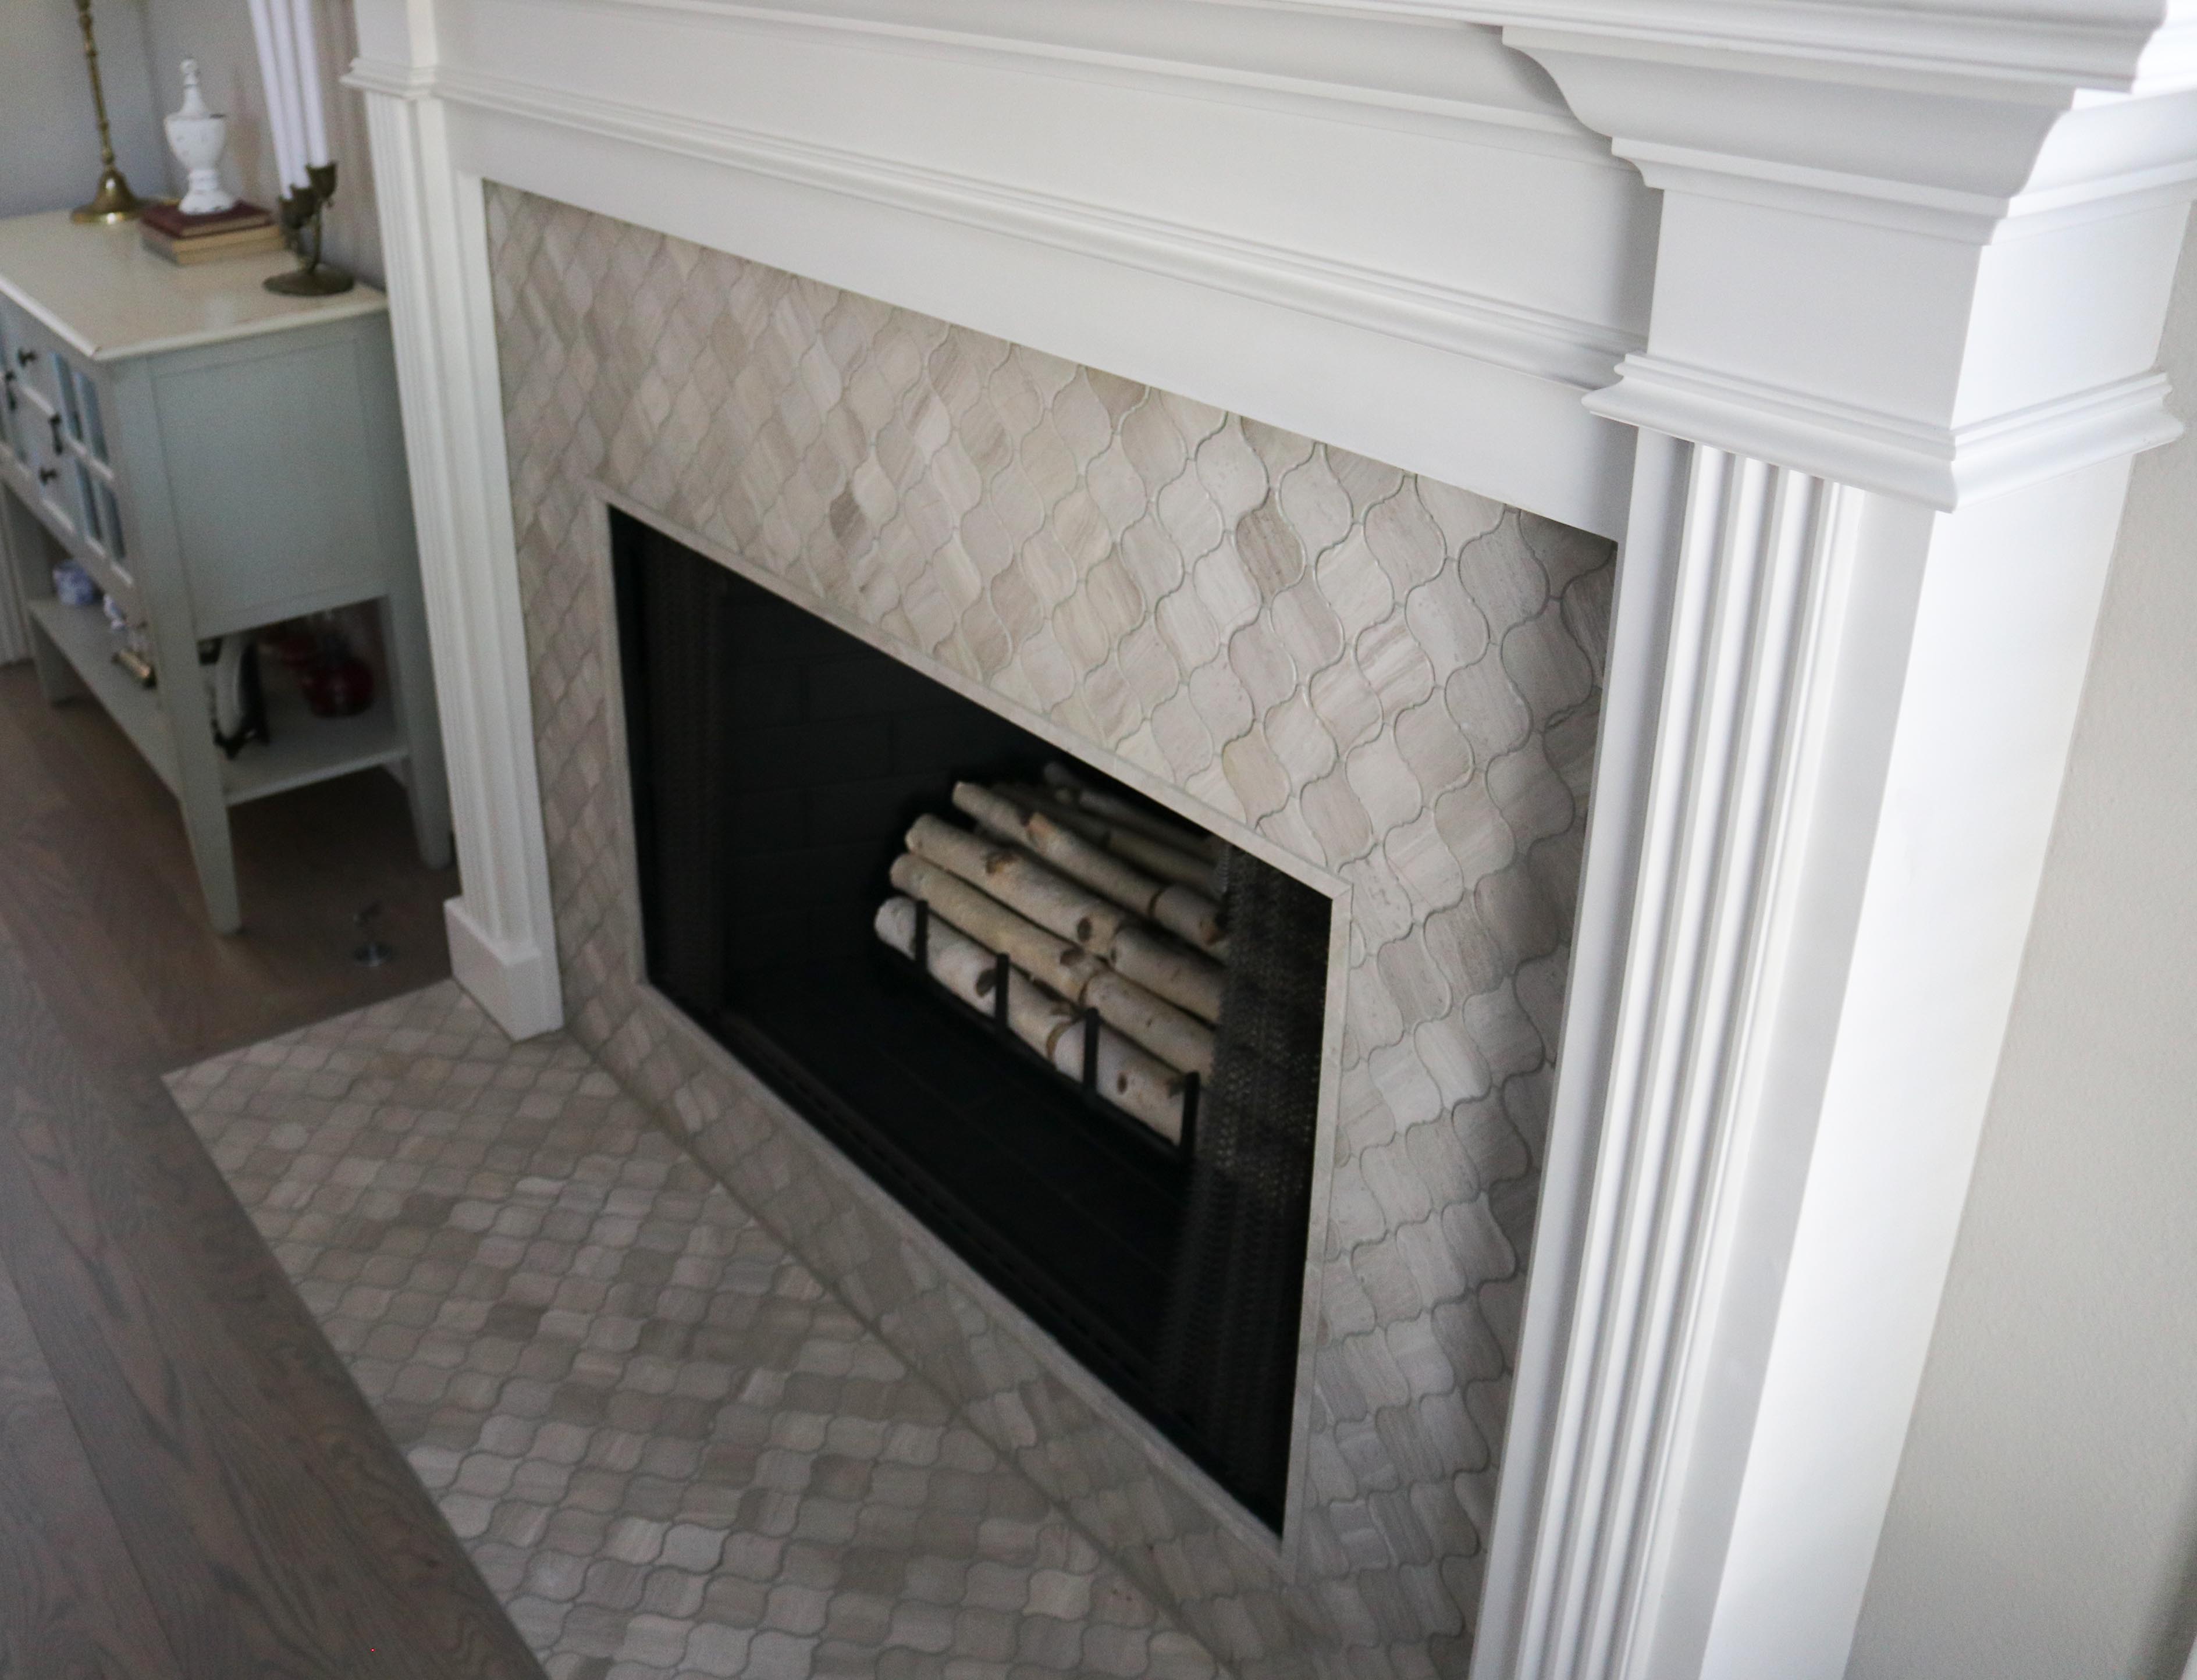 Tile fireplace